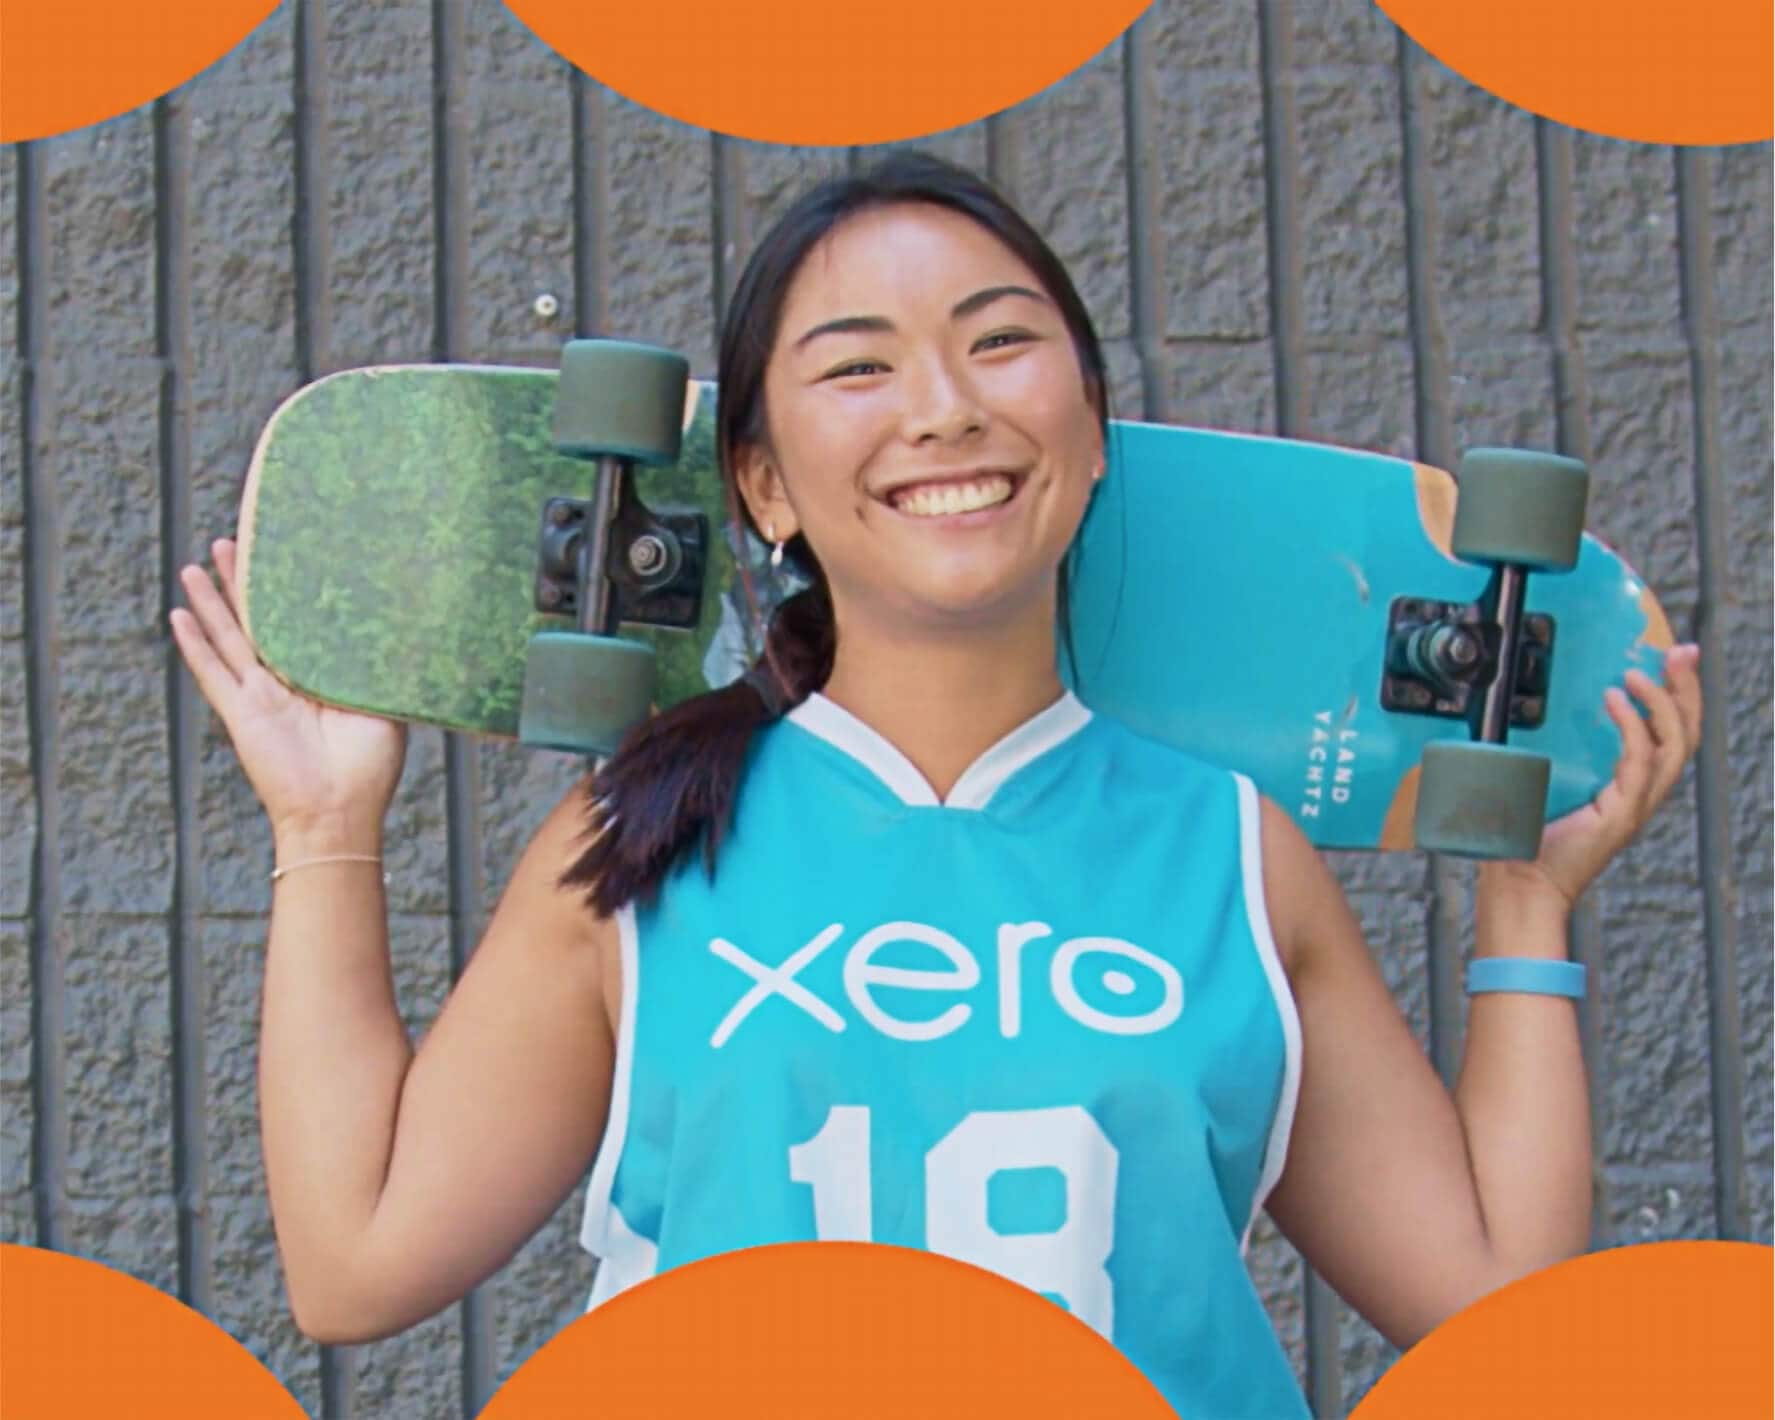 A Xero employee arrives at work on their skateboard.